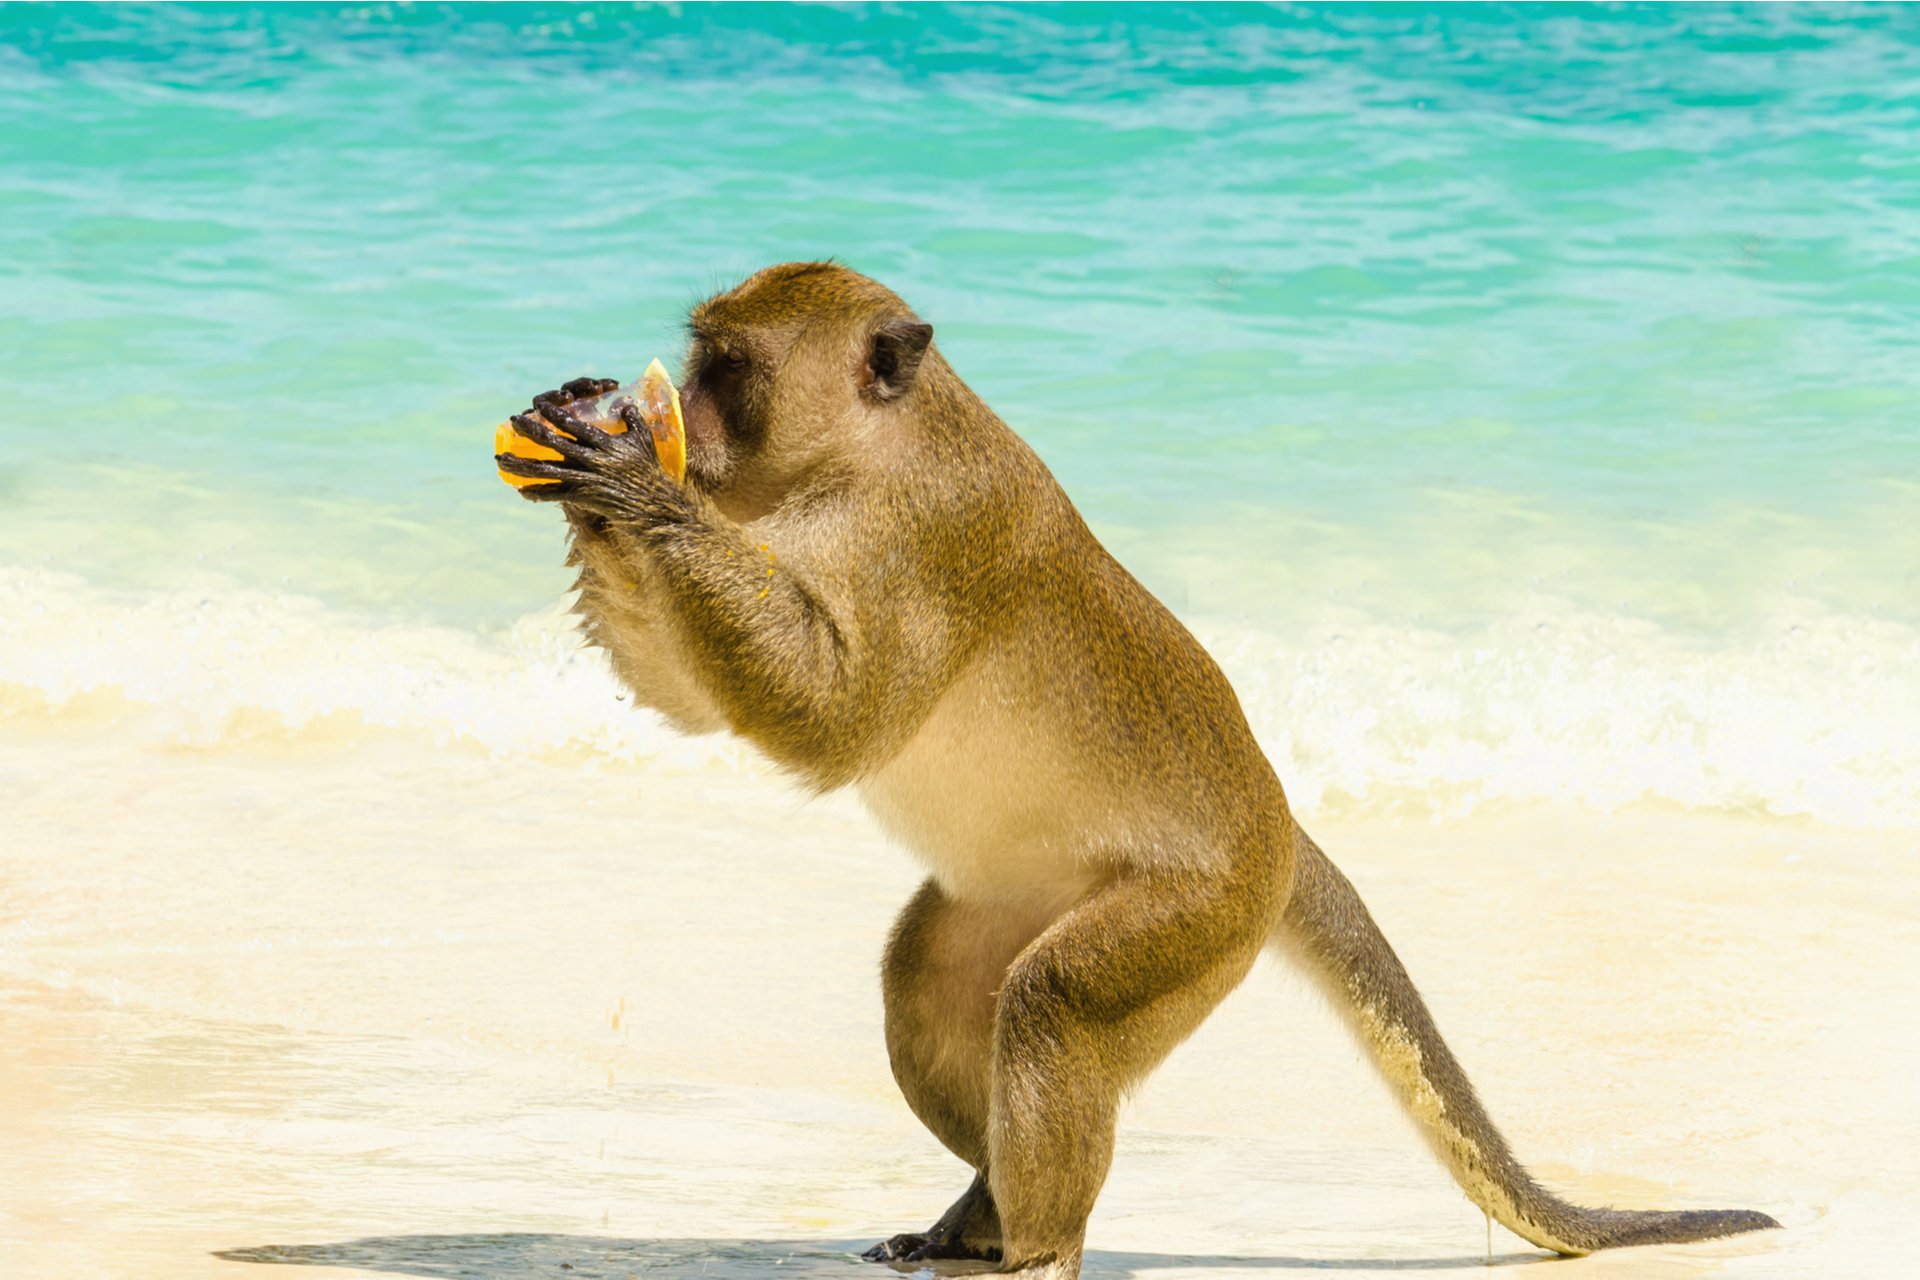 Monkey beach, Thailand -&nbsp;Blue sea, tropical sun and cheeky monkeys are all waiting for you